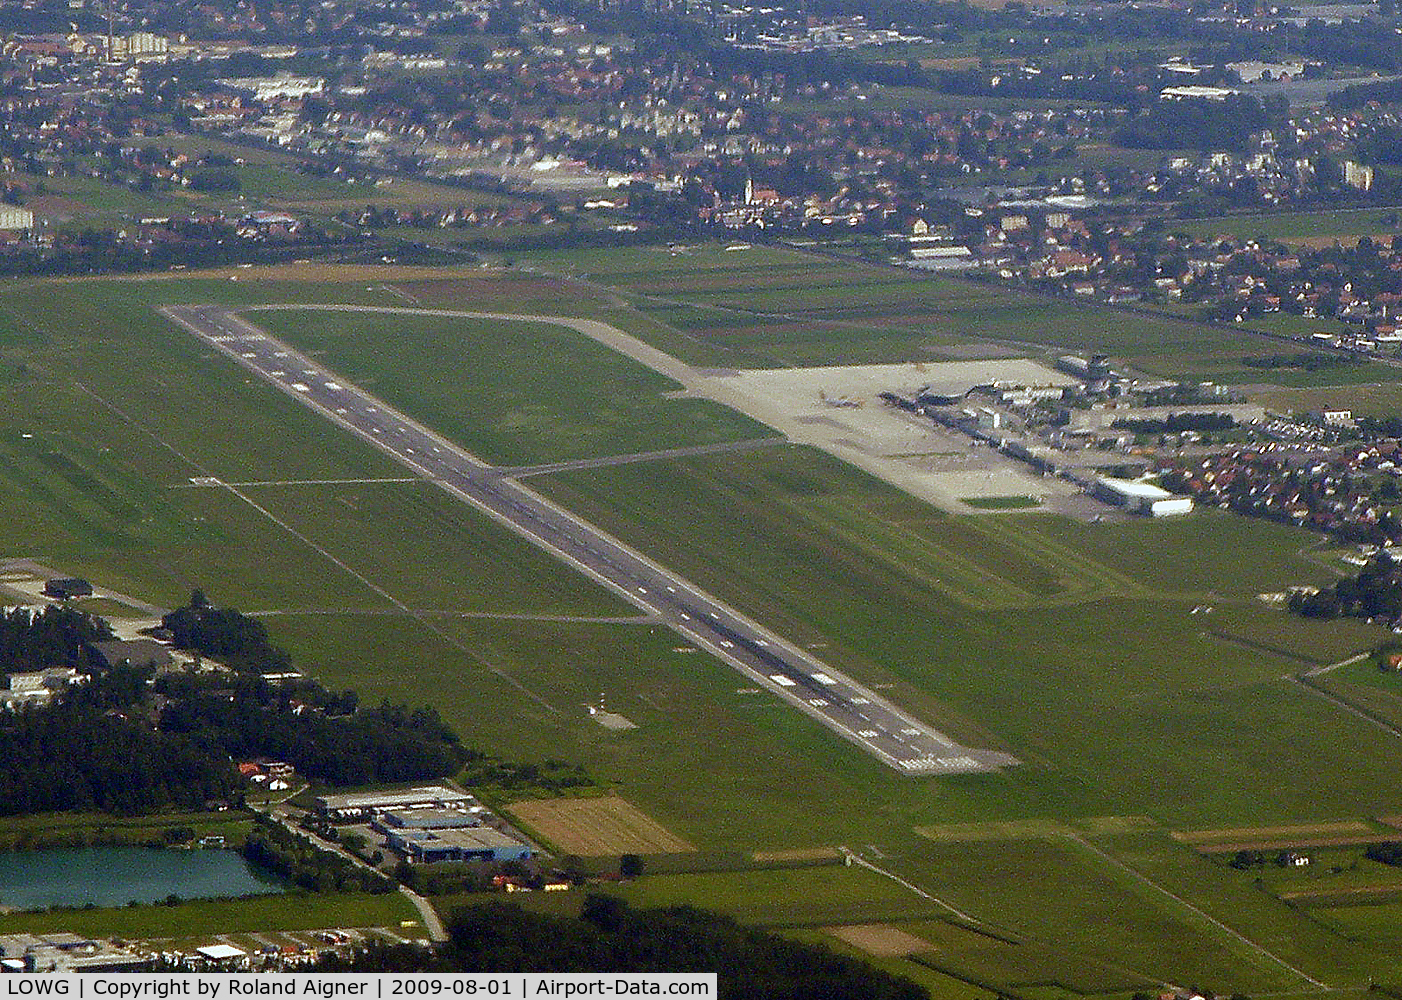 Graz Airport, Graz Austria (LOWG) - Some minutes after departure to Frankfurt